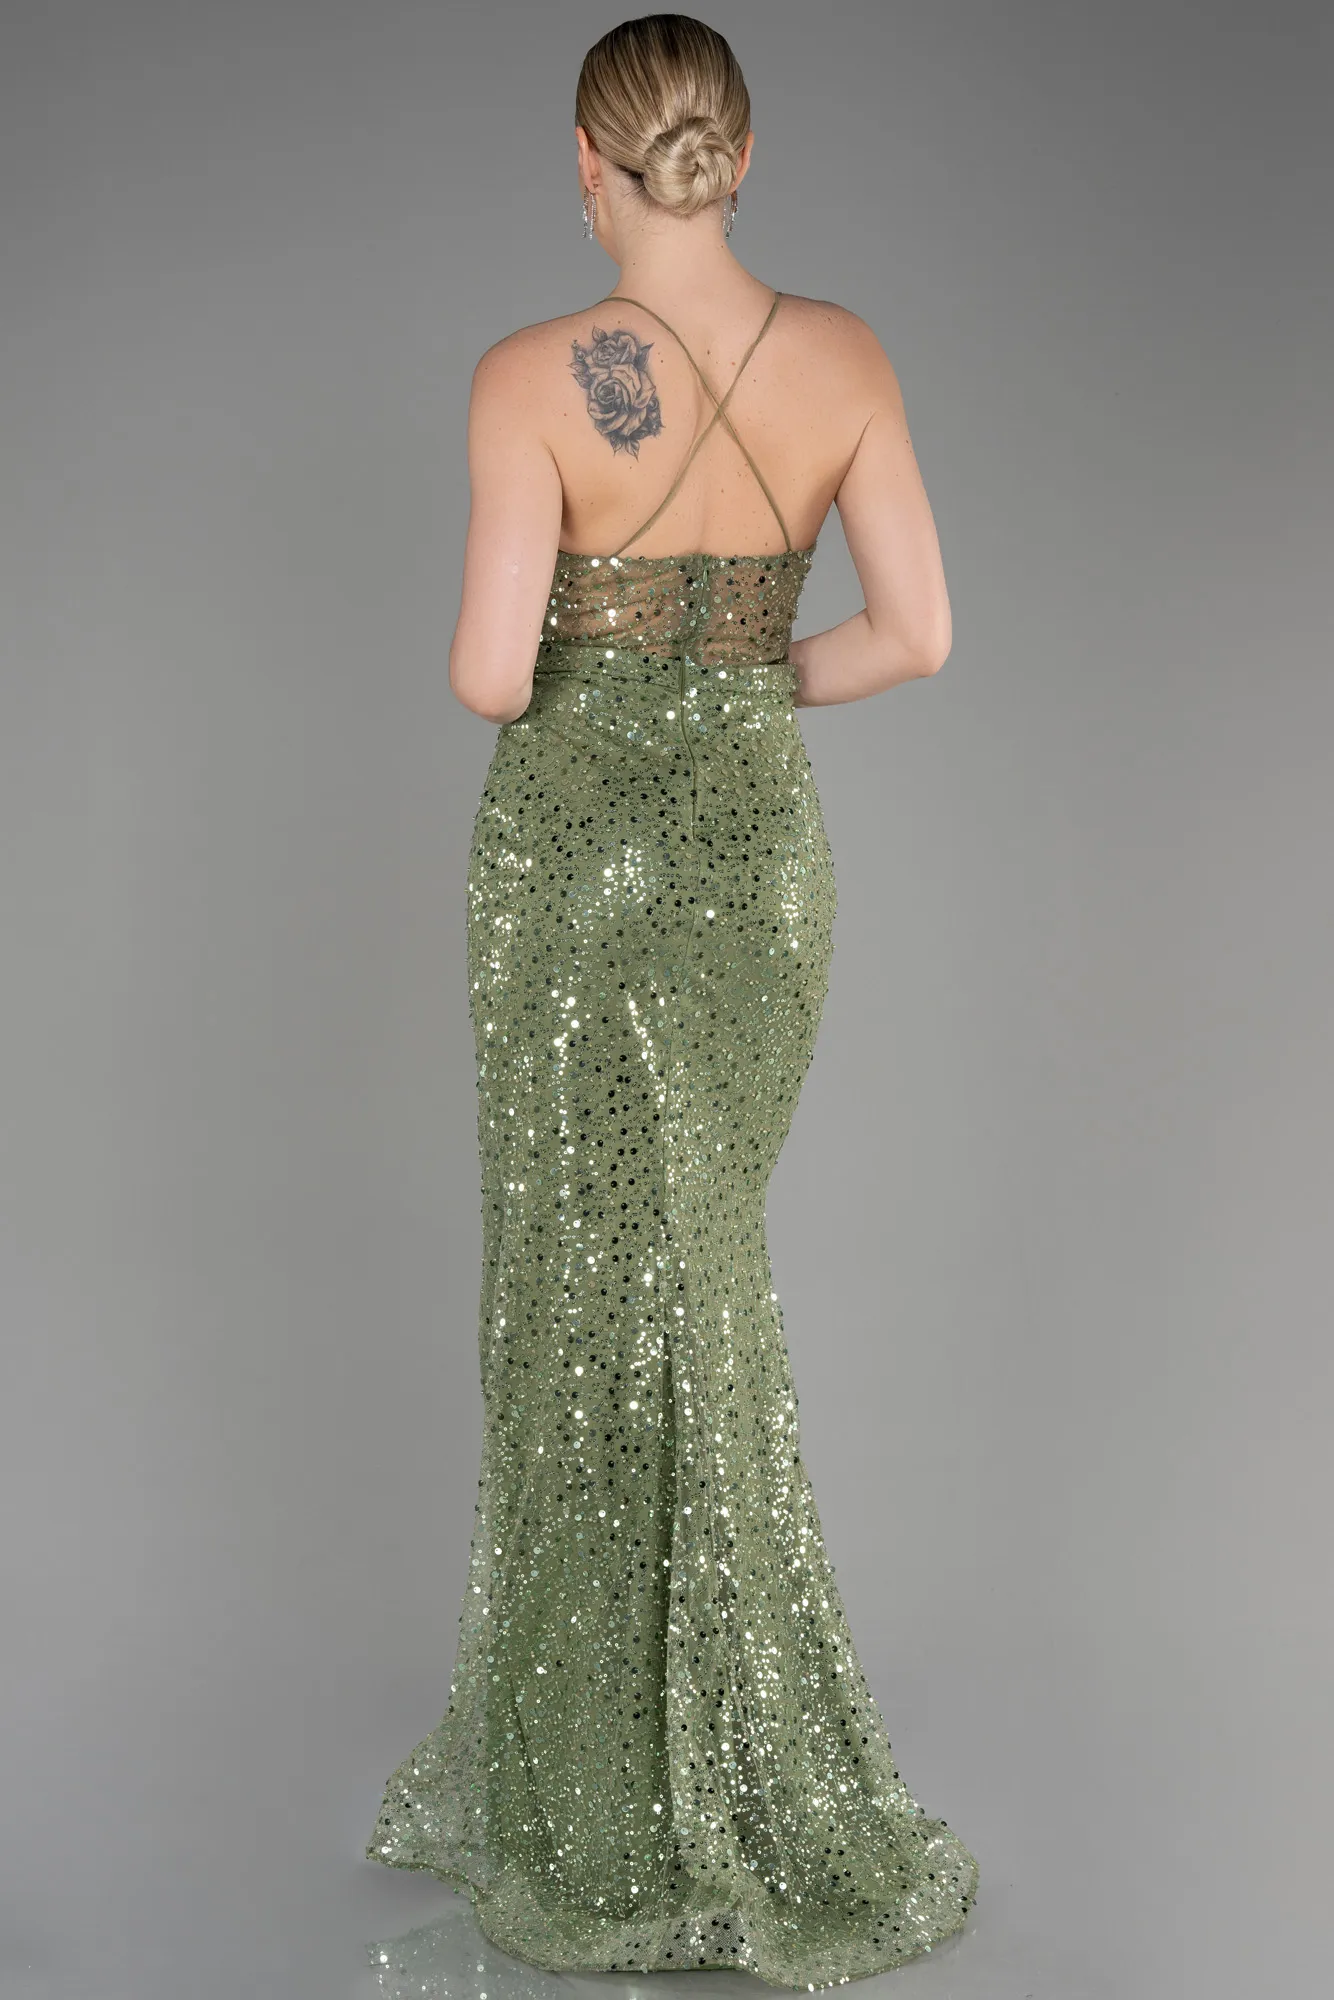 Olive Drab-Long Scaly Mermaid Prom Dress ABU3561